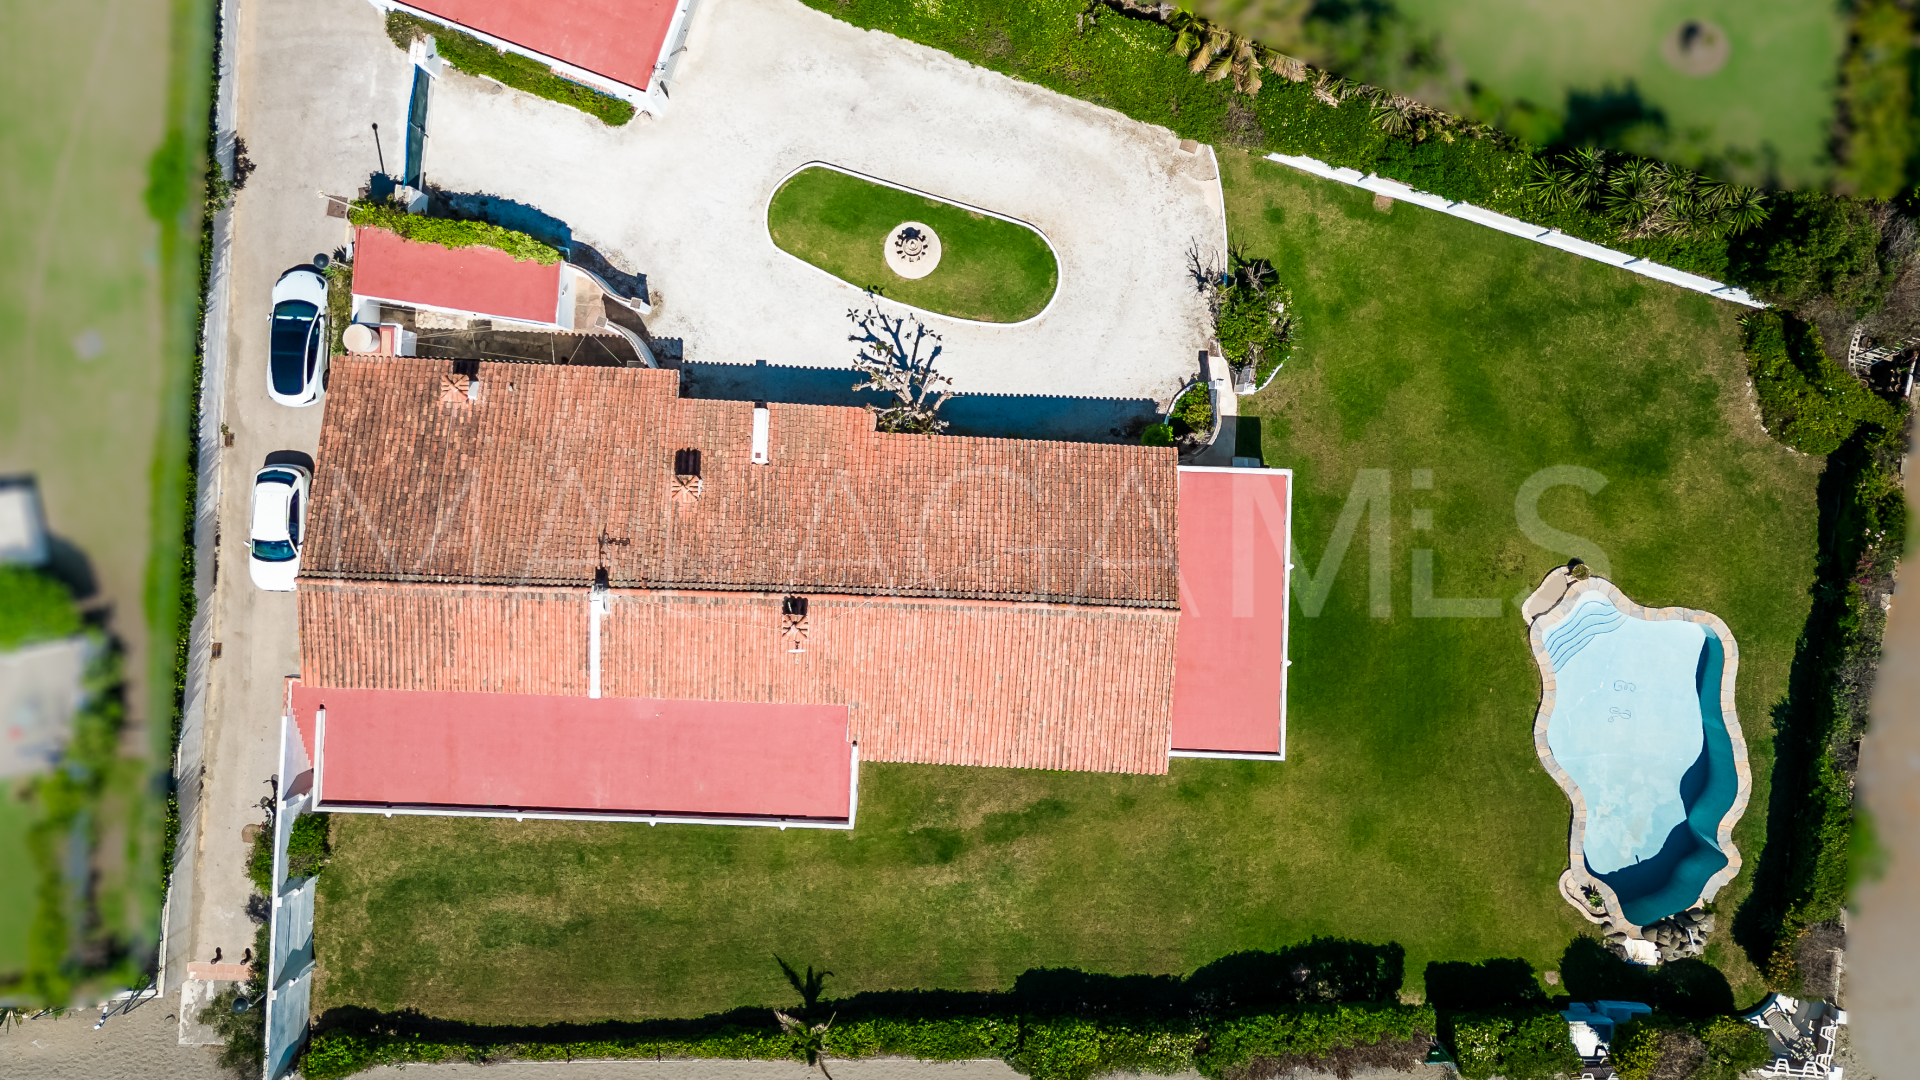 Buy villa with 4 bedrooms in Guadalmina Baja